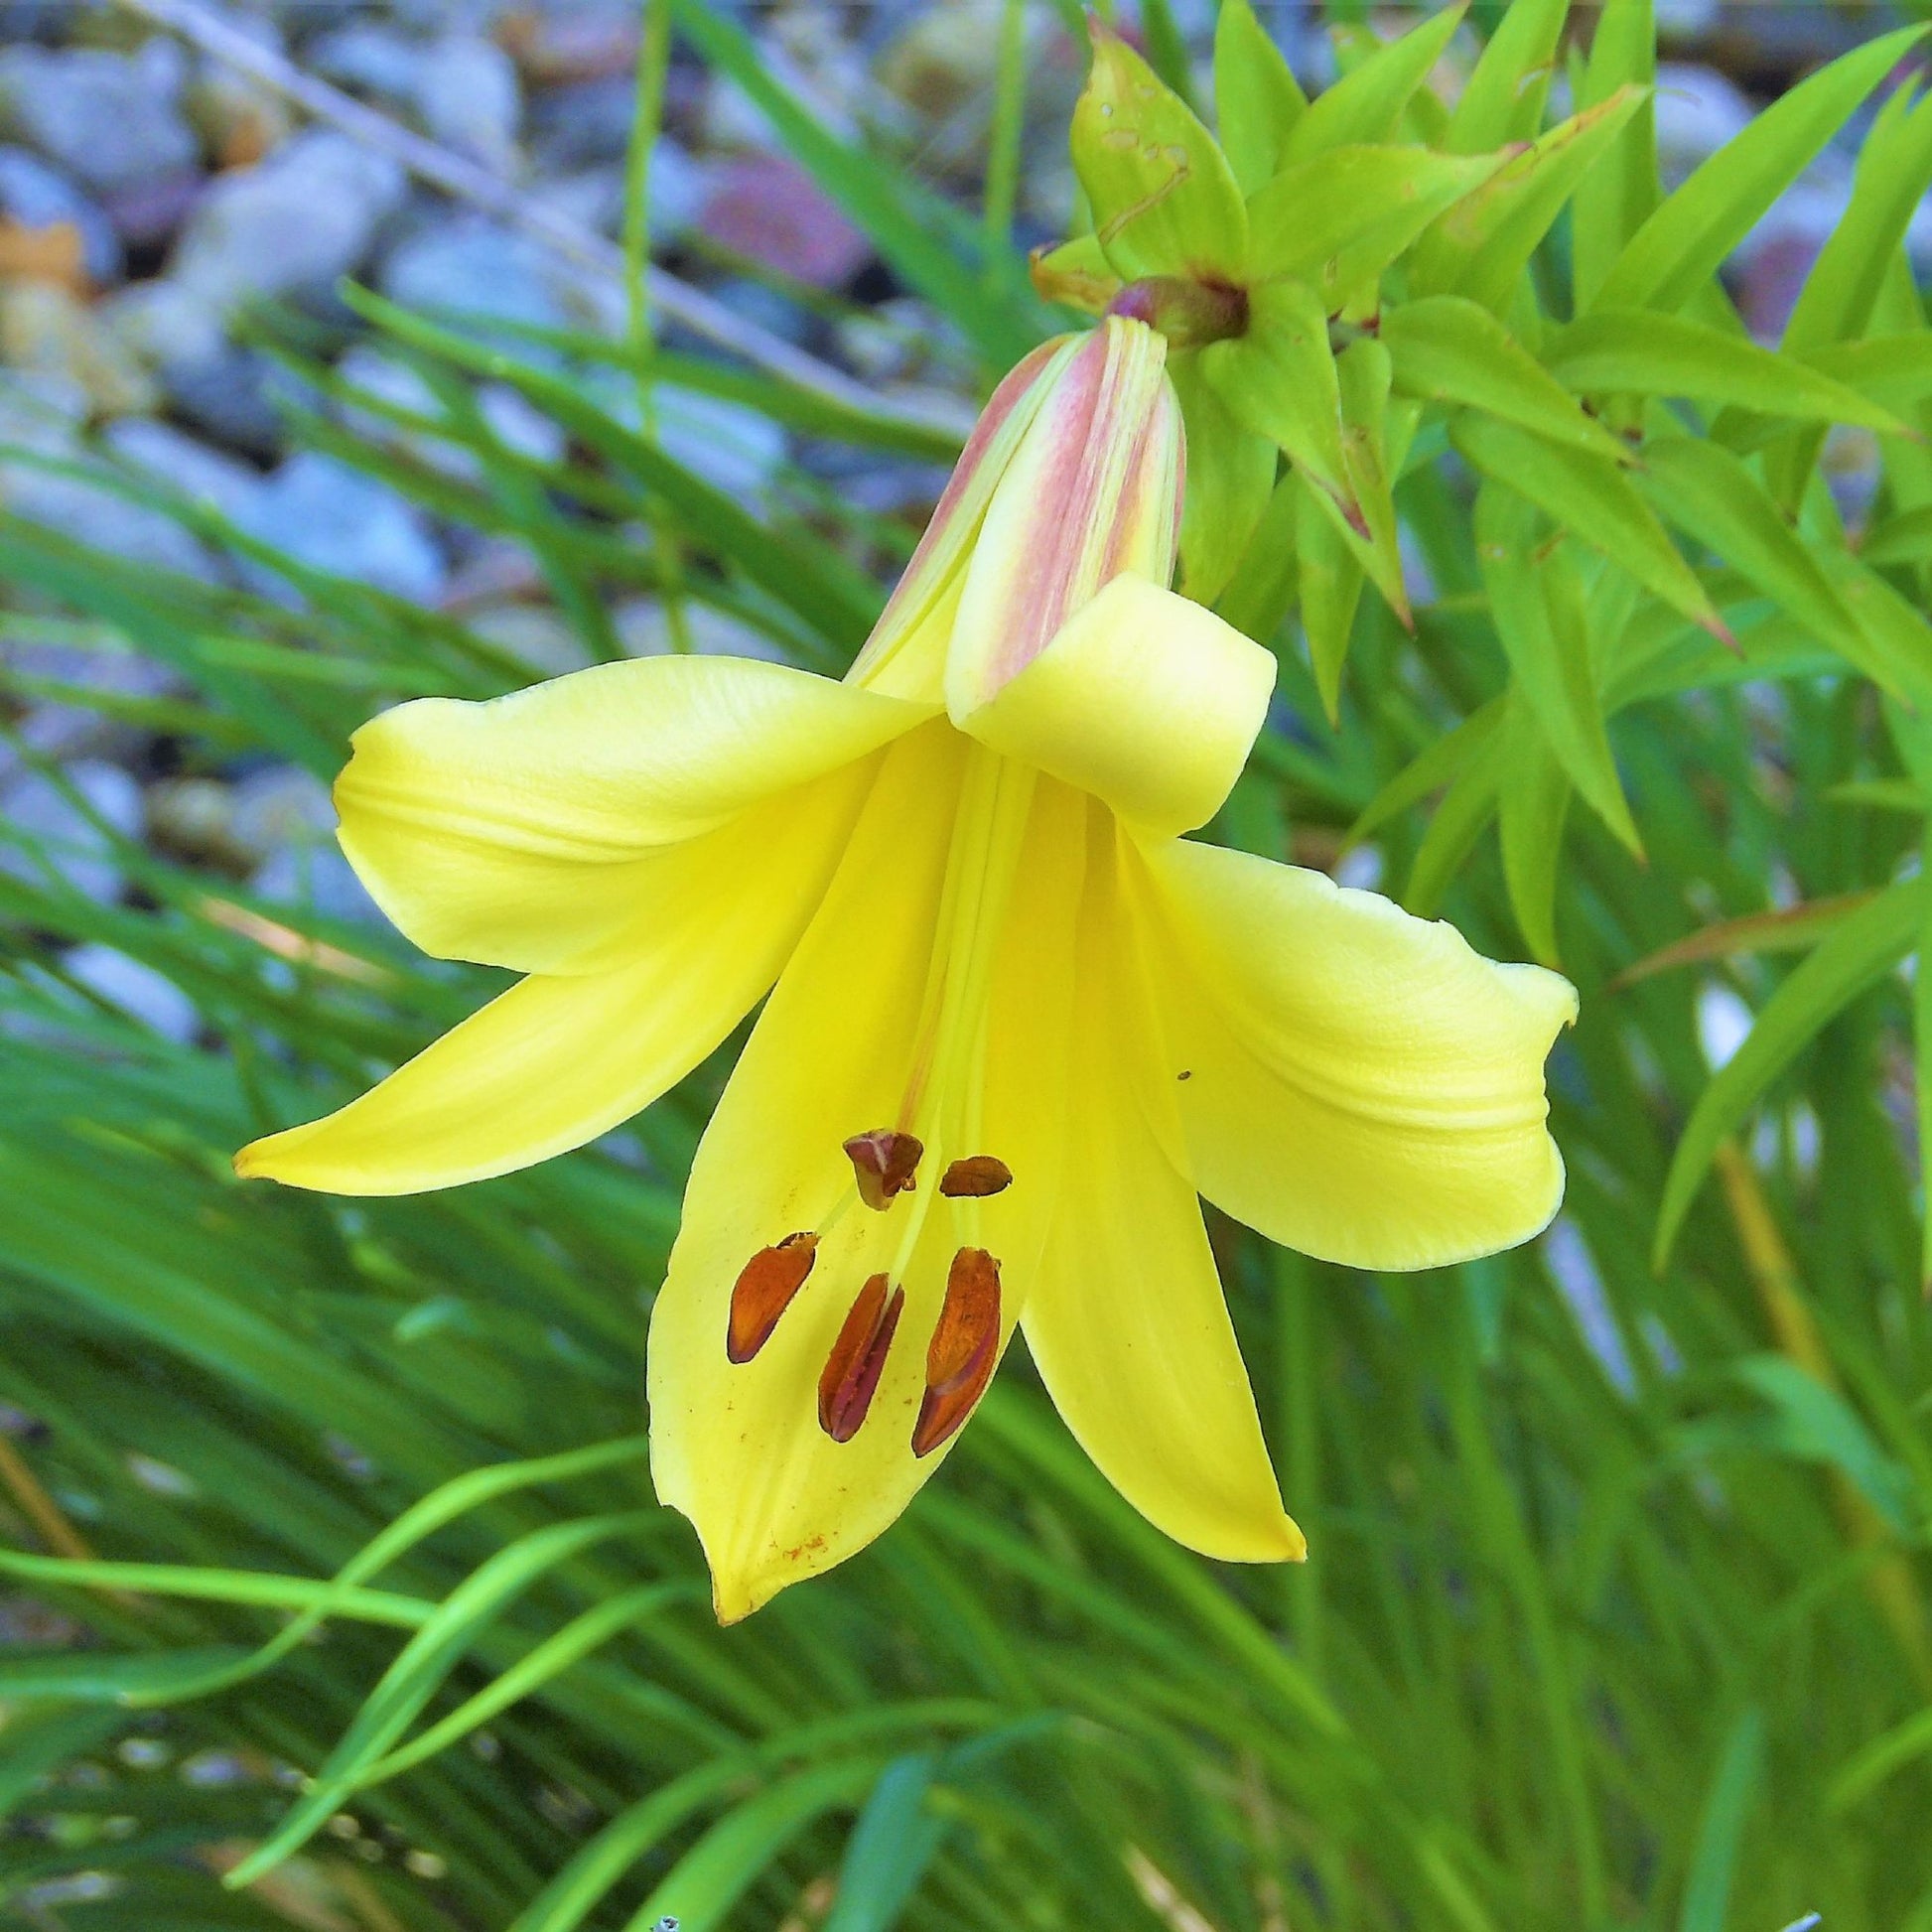 Electric Yellow "Golden Splendor" Trumpet Lily